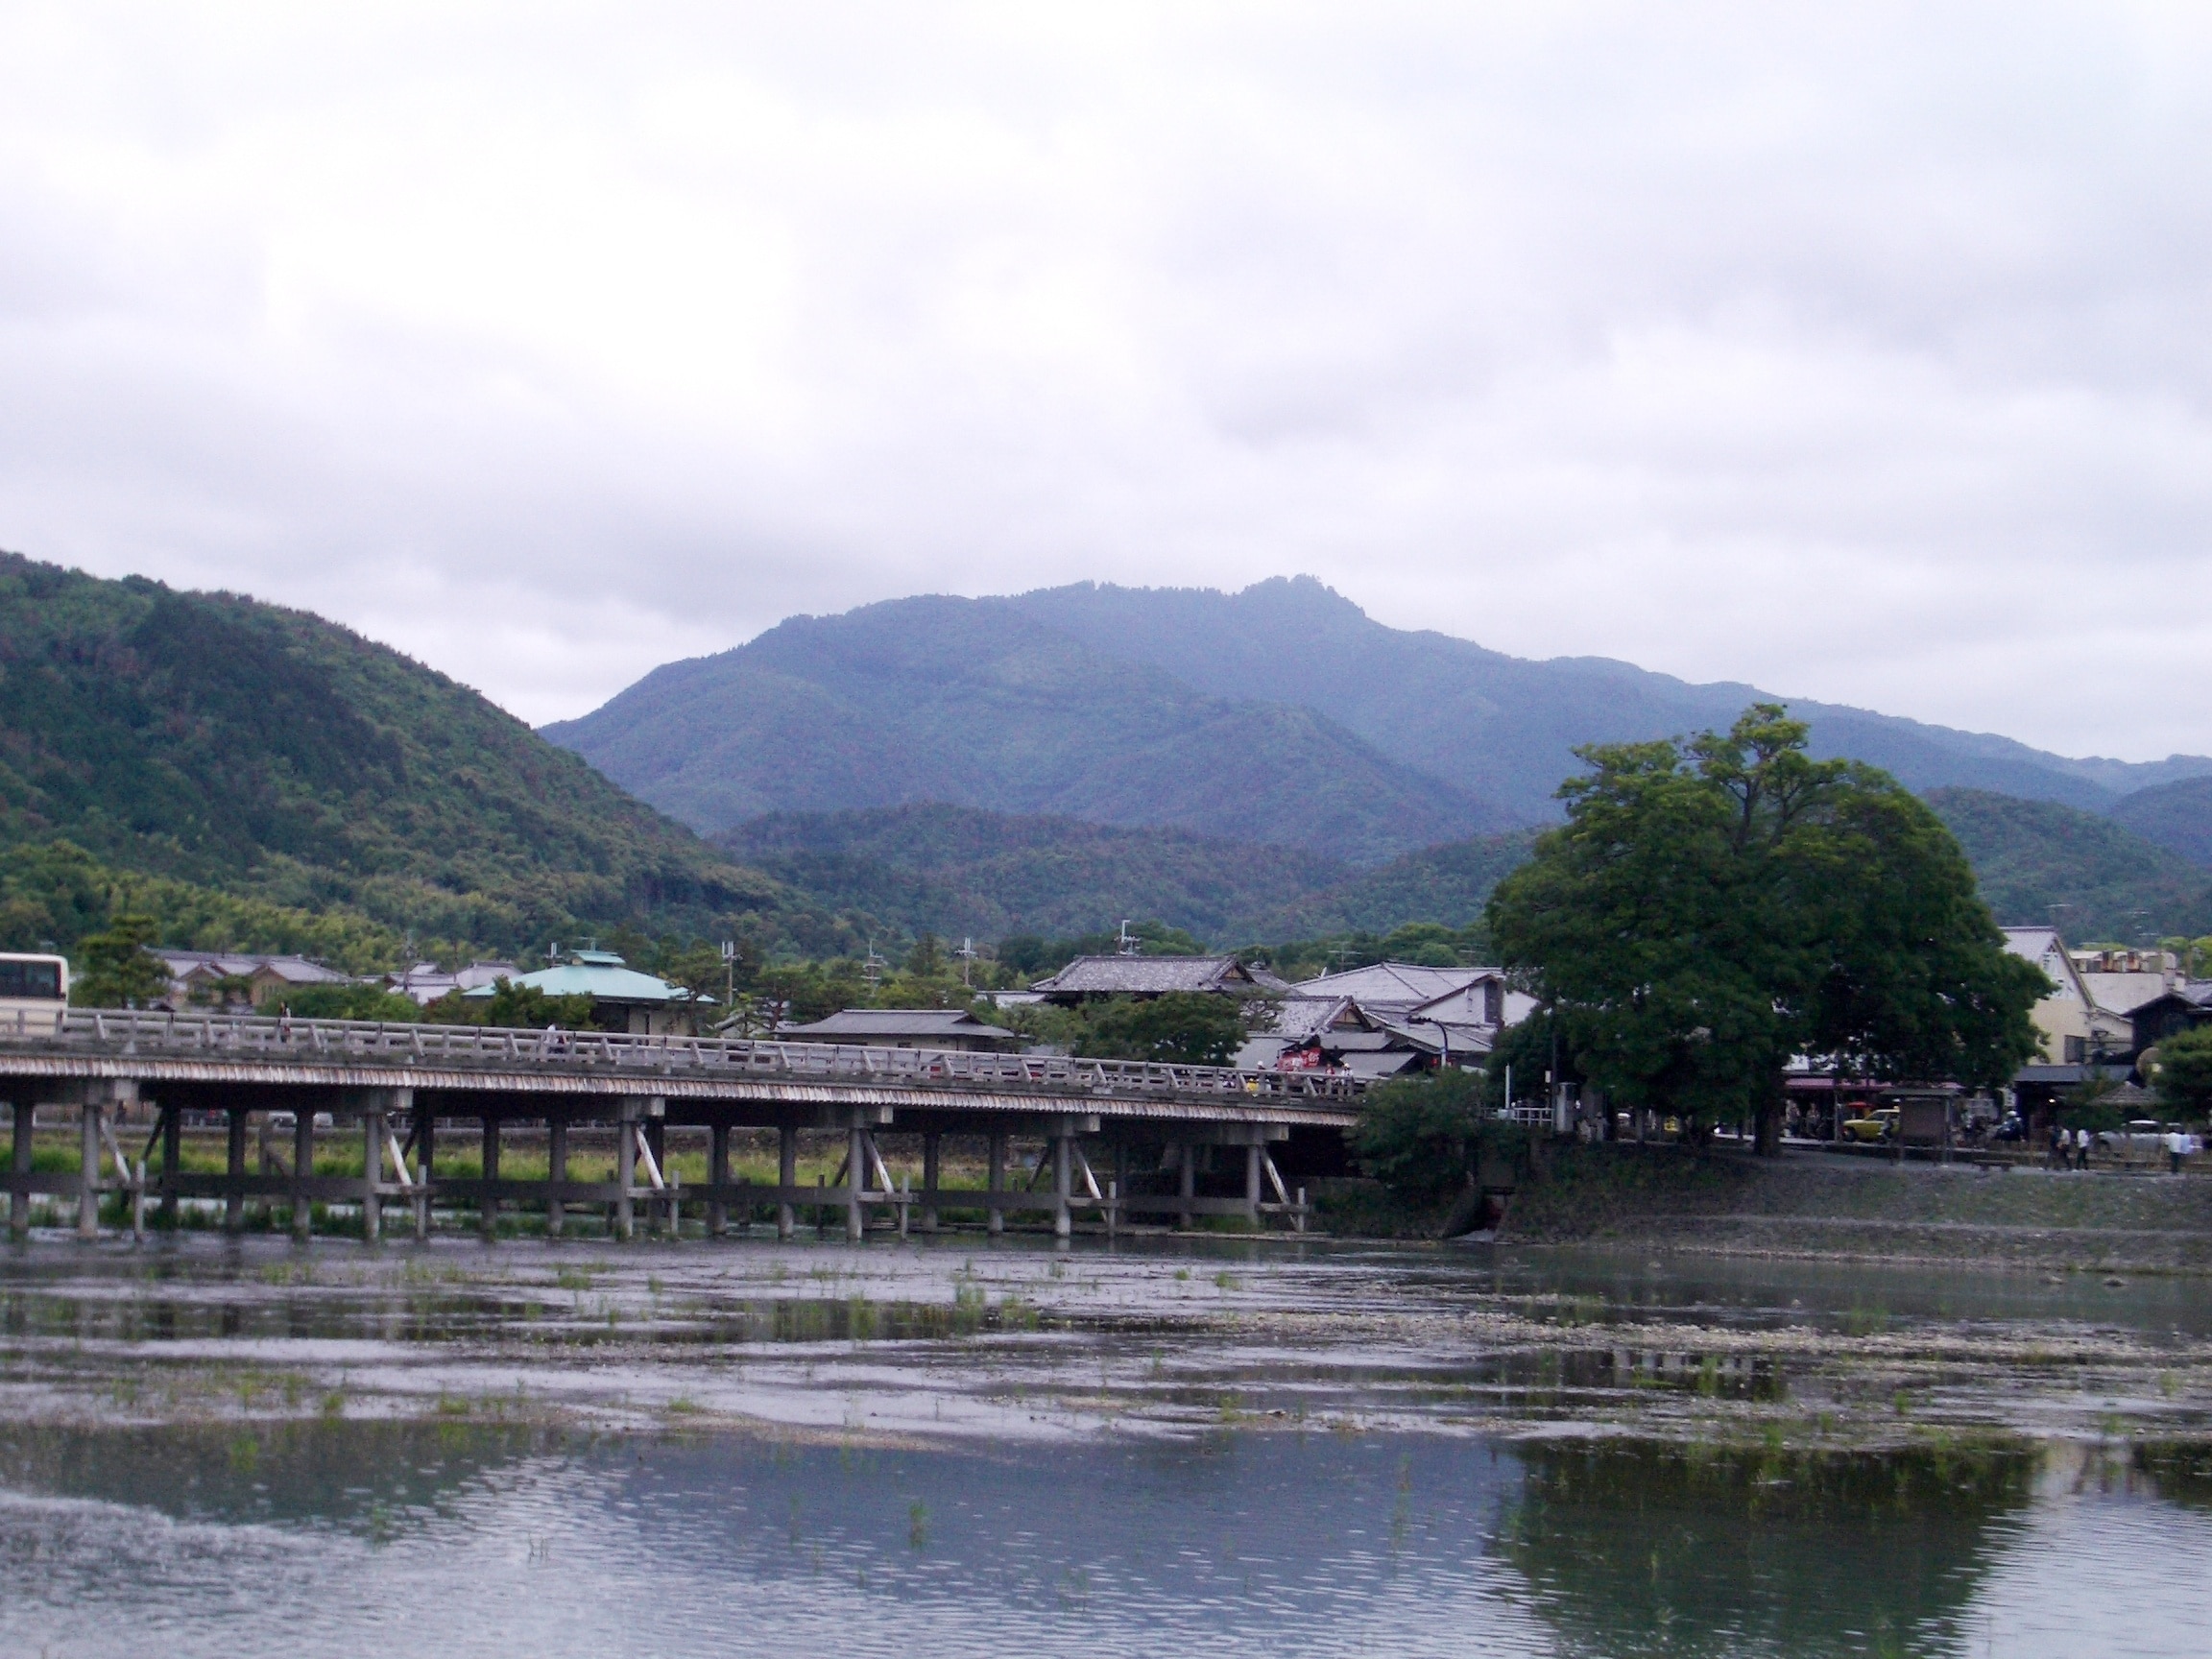 The Southeast side of Mount Atago seen from Arashiyama, Kyoto, Japan.